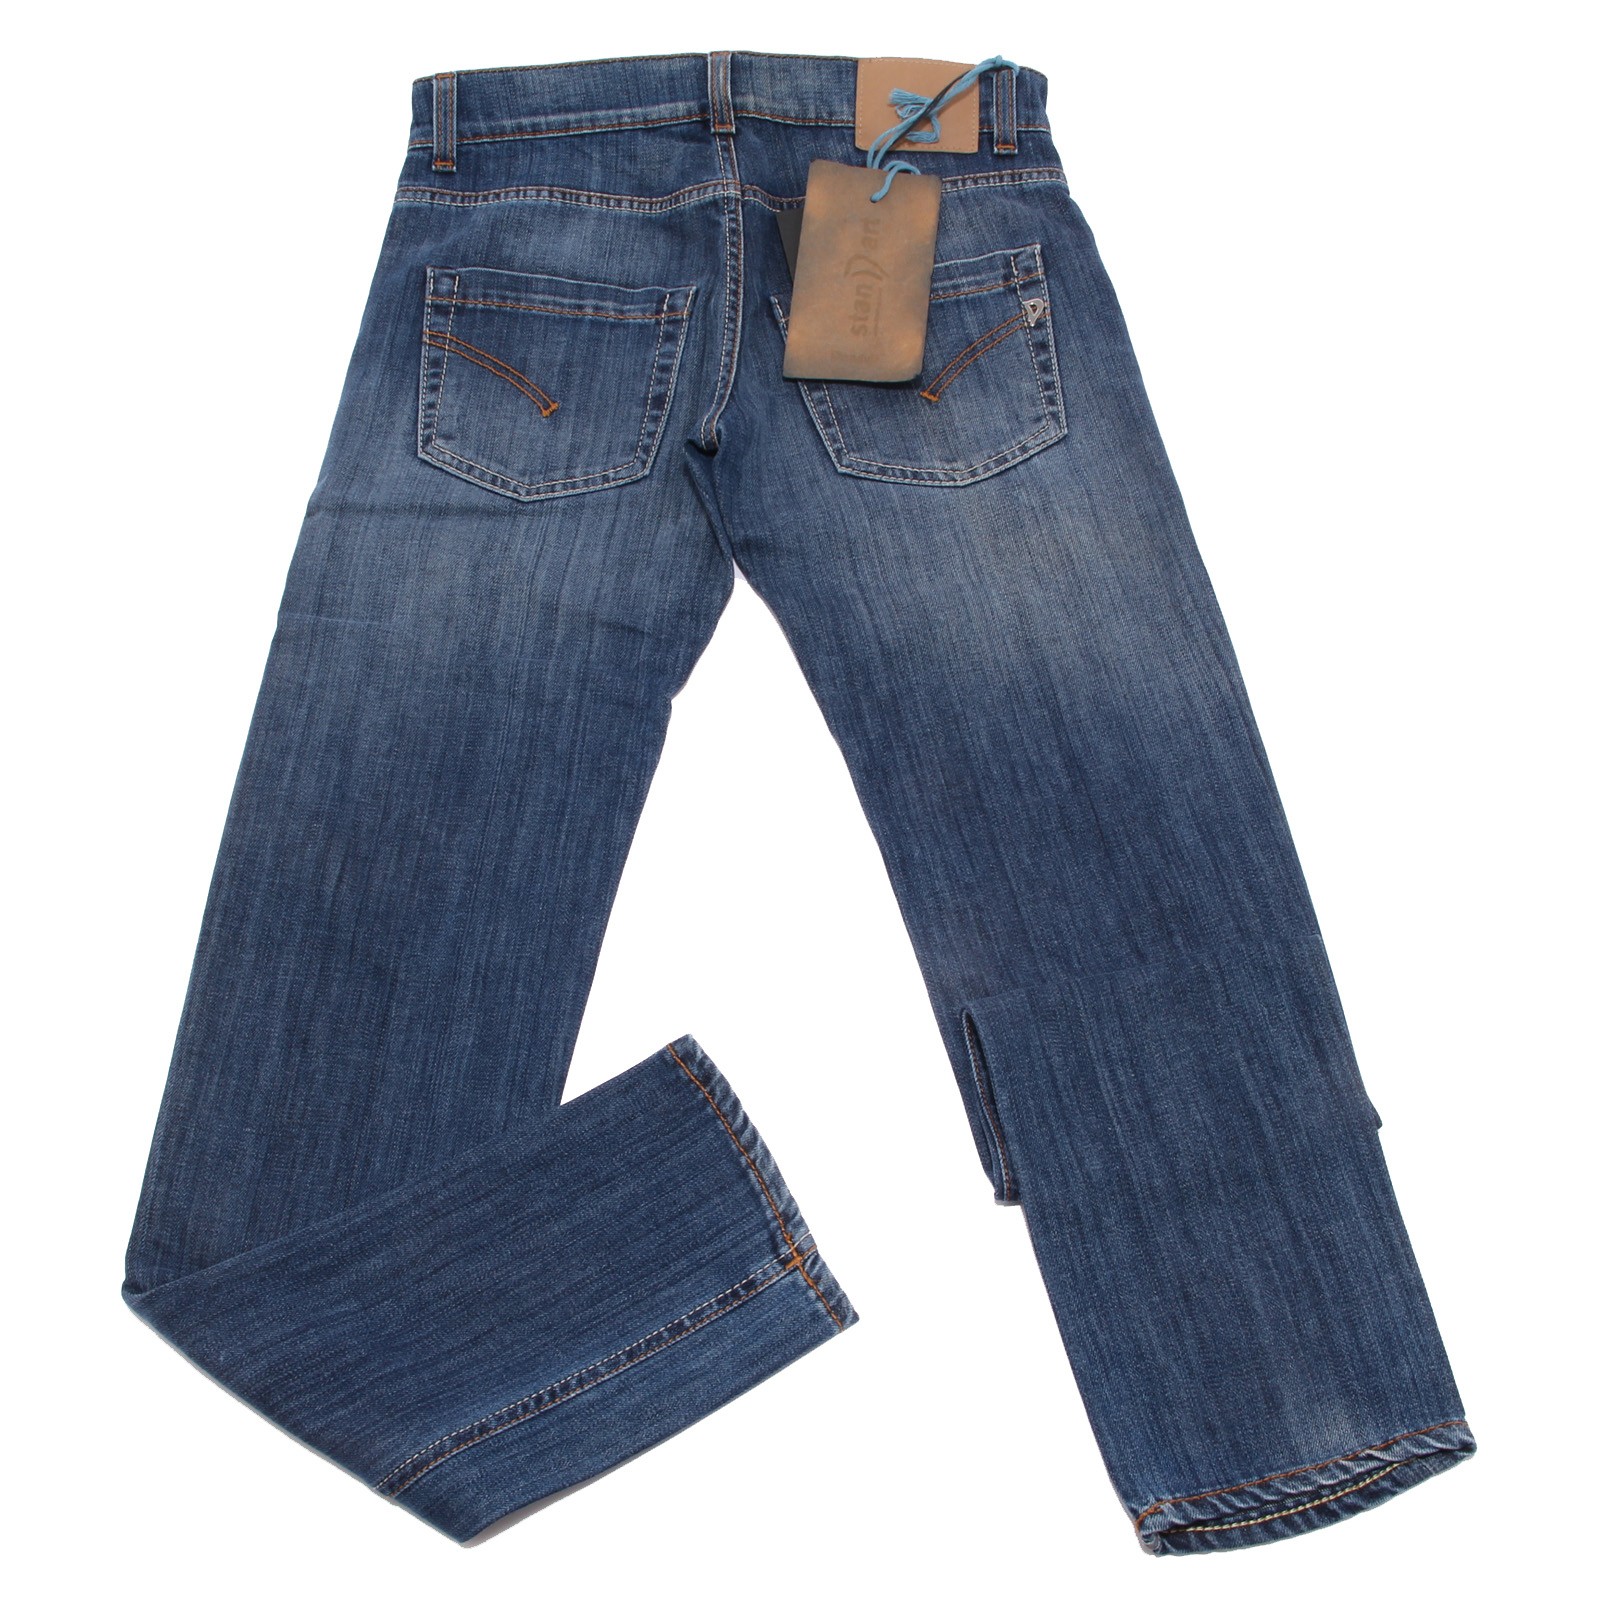 9598U baby jeans DONDUP DIONIS denim pant trouser kid | eBay